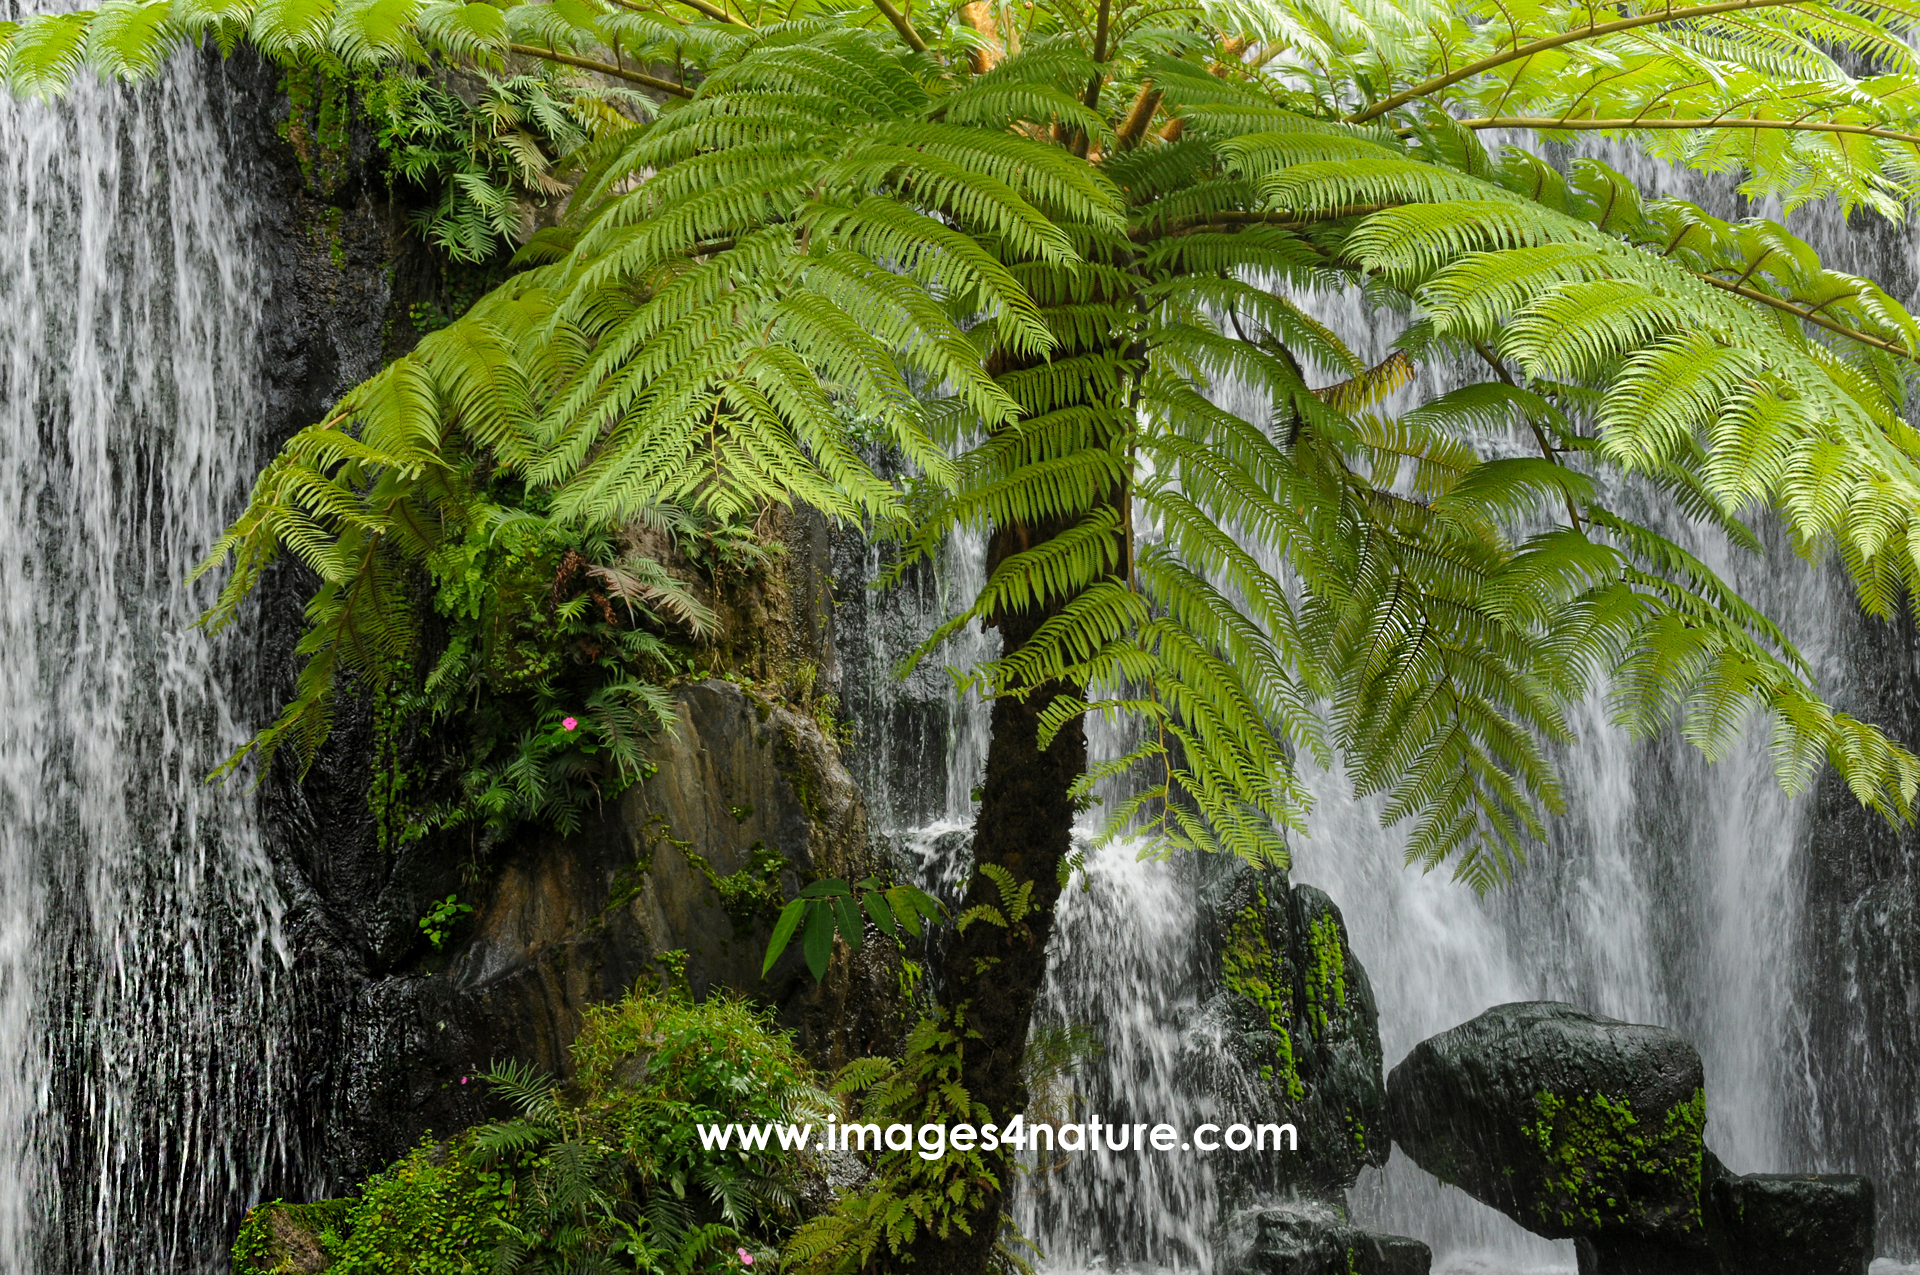 Tree fern growing in front of waterfall with black rocks